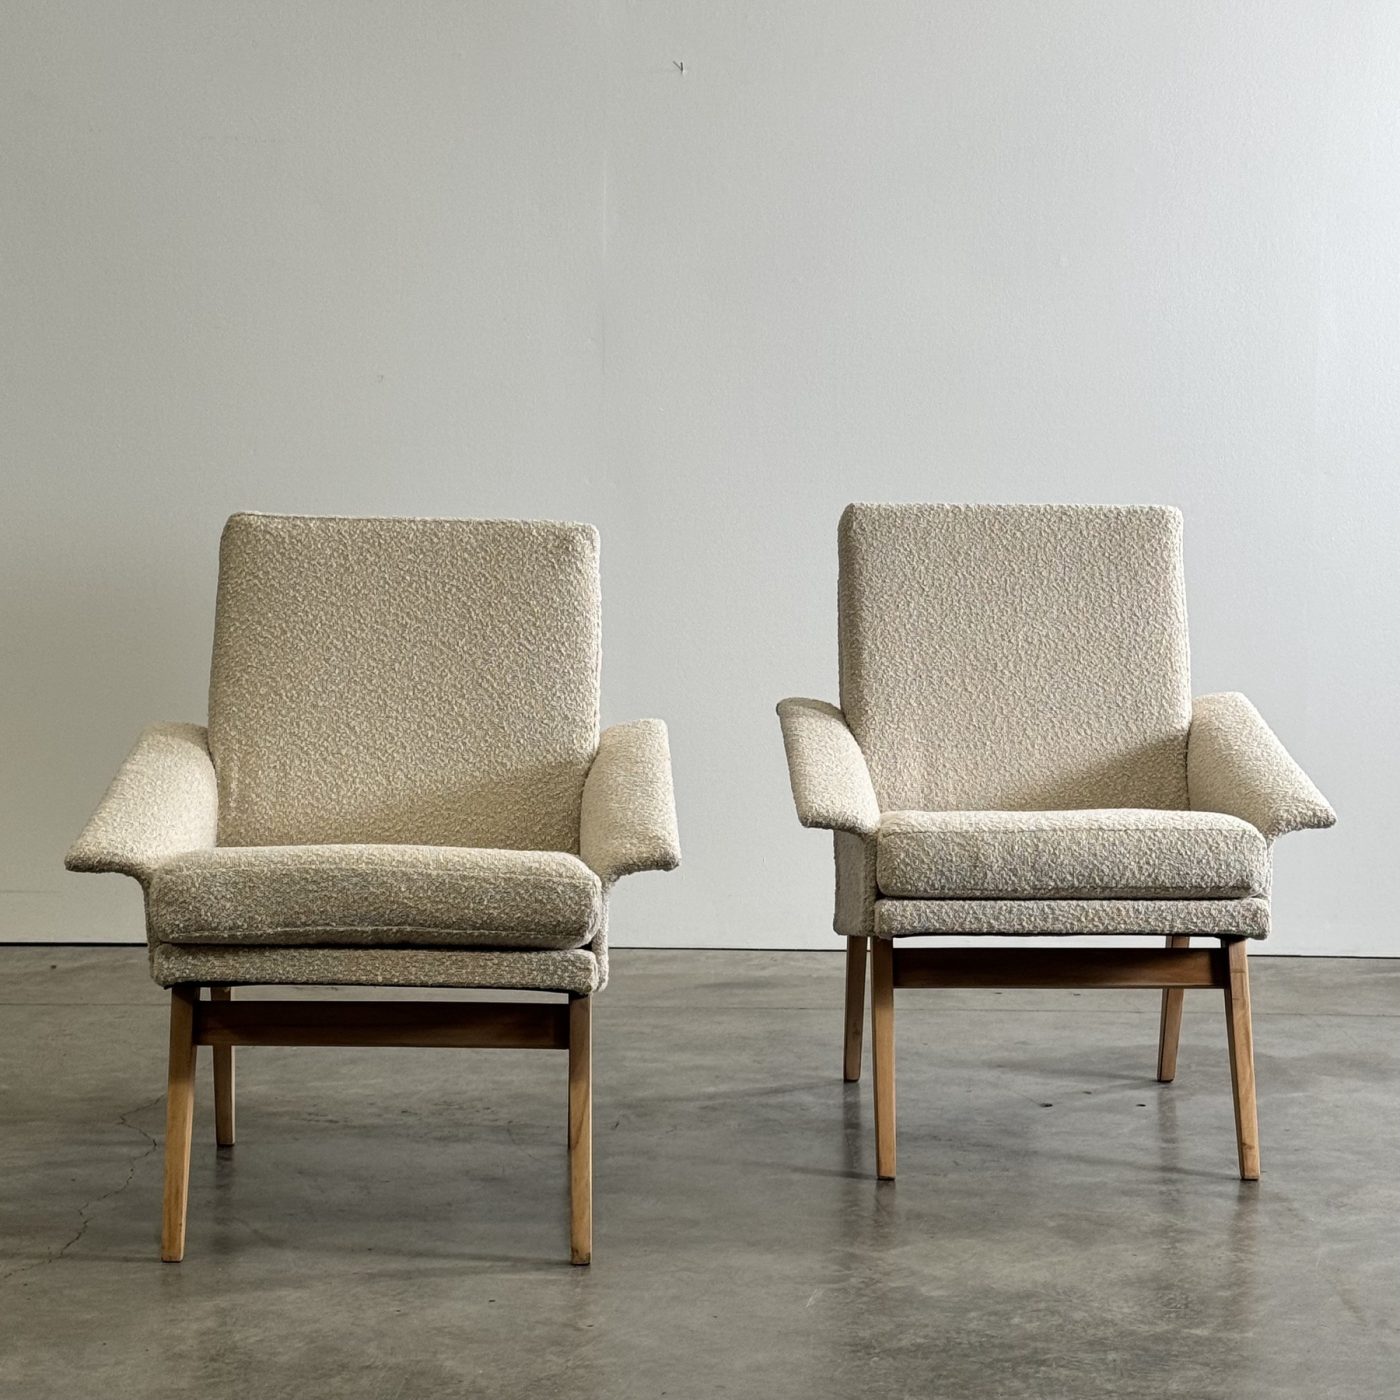 objet-vagabond-vintage-armchairs0001